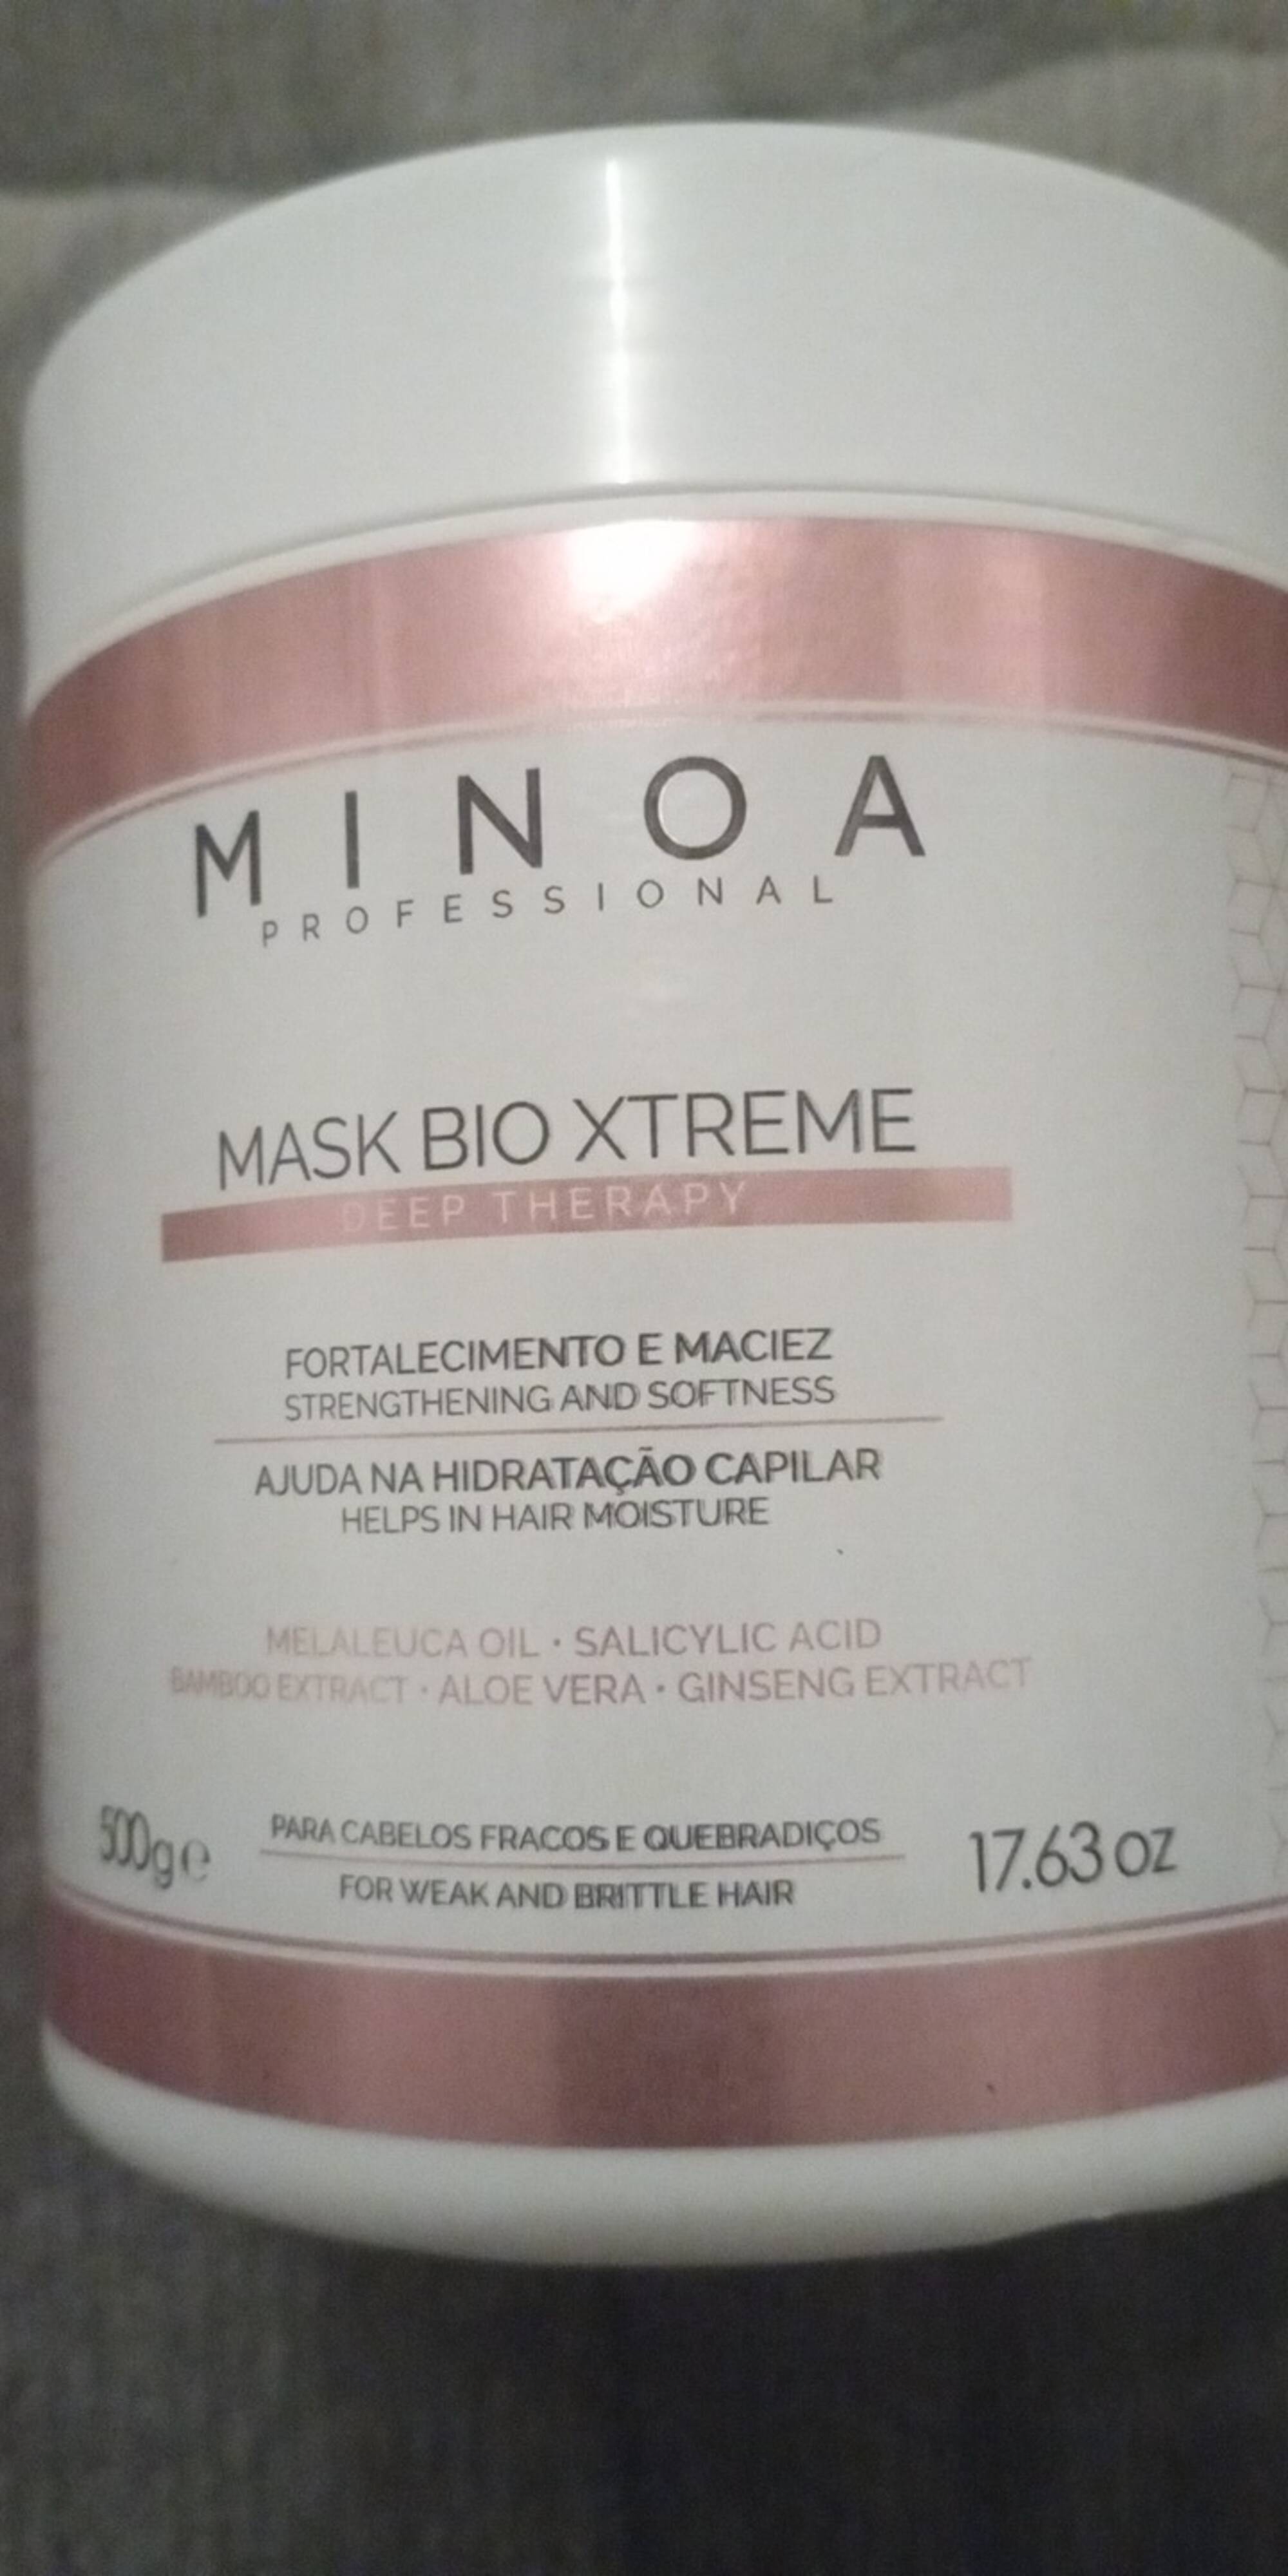 MINOA PROFESSIONAL - Mask bio xtreme deep therapy 